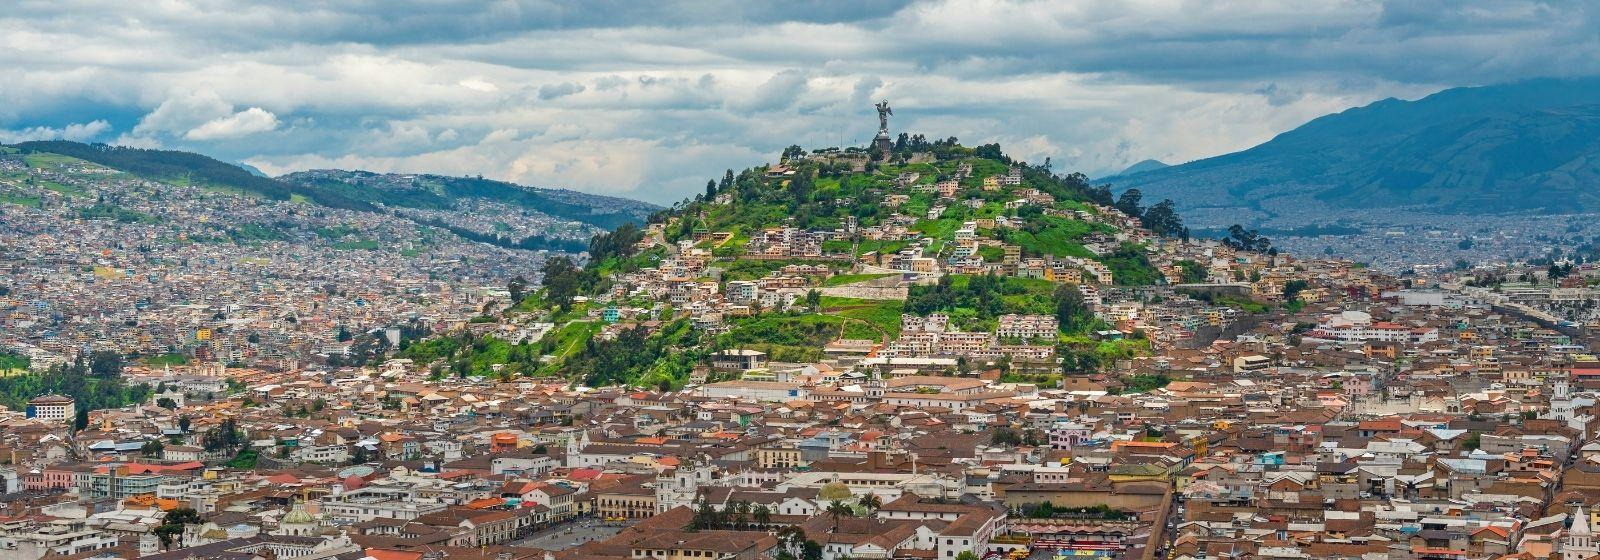 Psicólogos expertos en Fobias en Quito